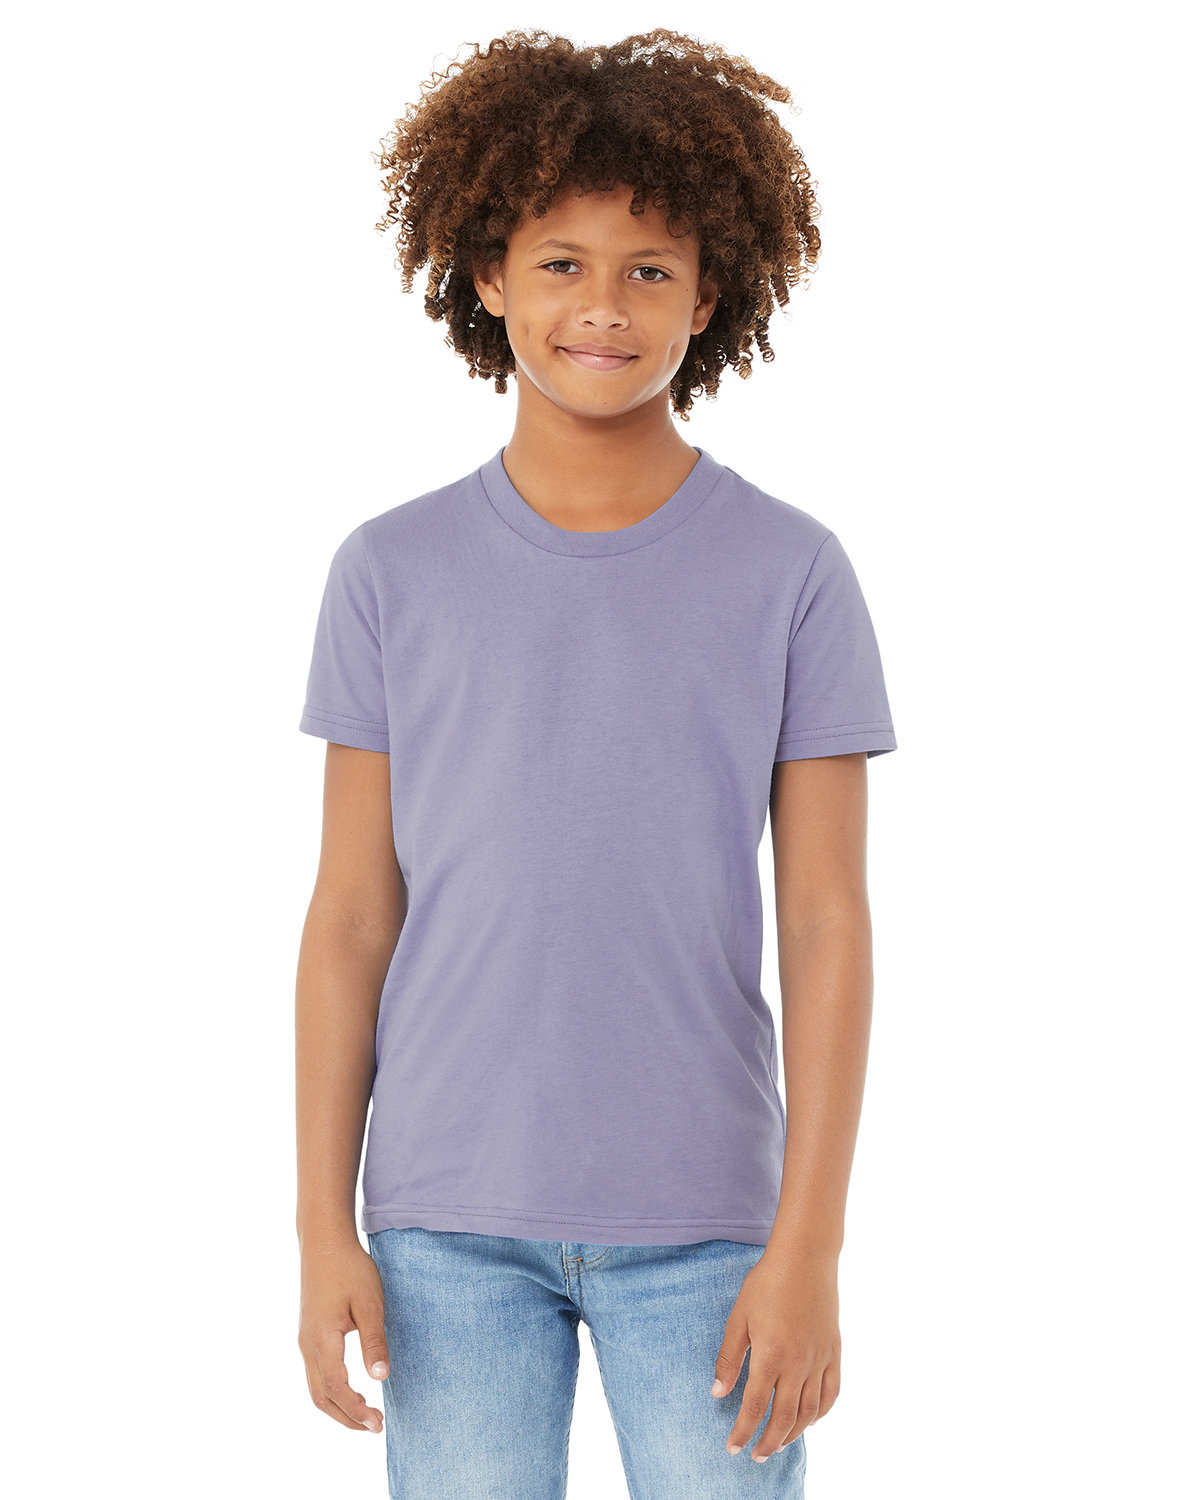 Bella + Canvas Youth Jersey T-Shirt dark lavender 